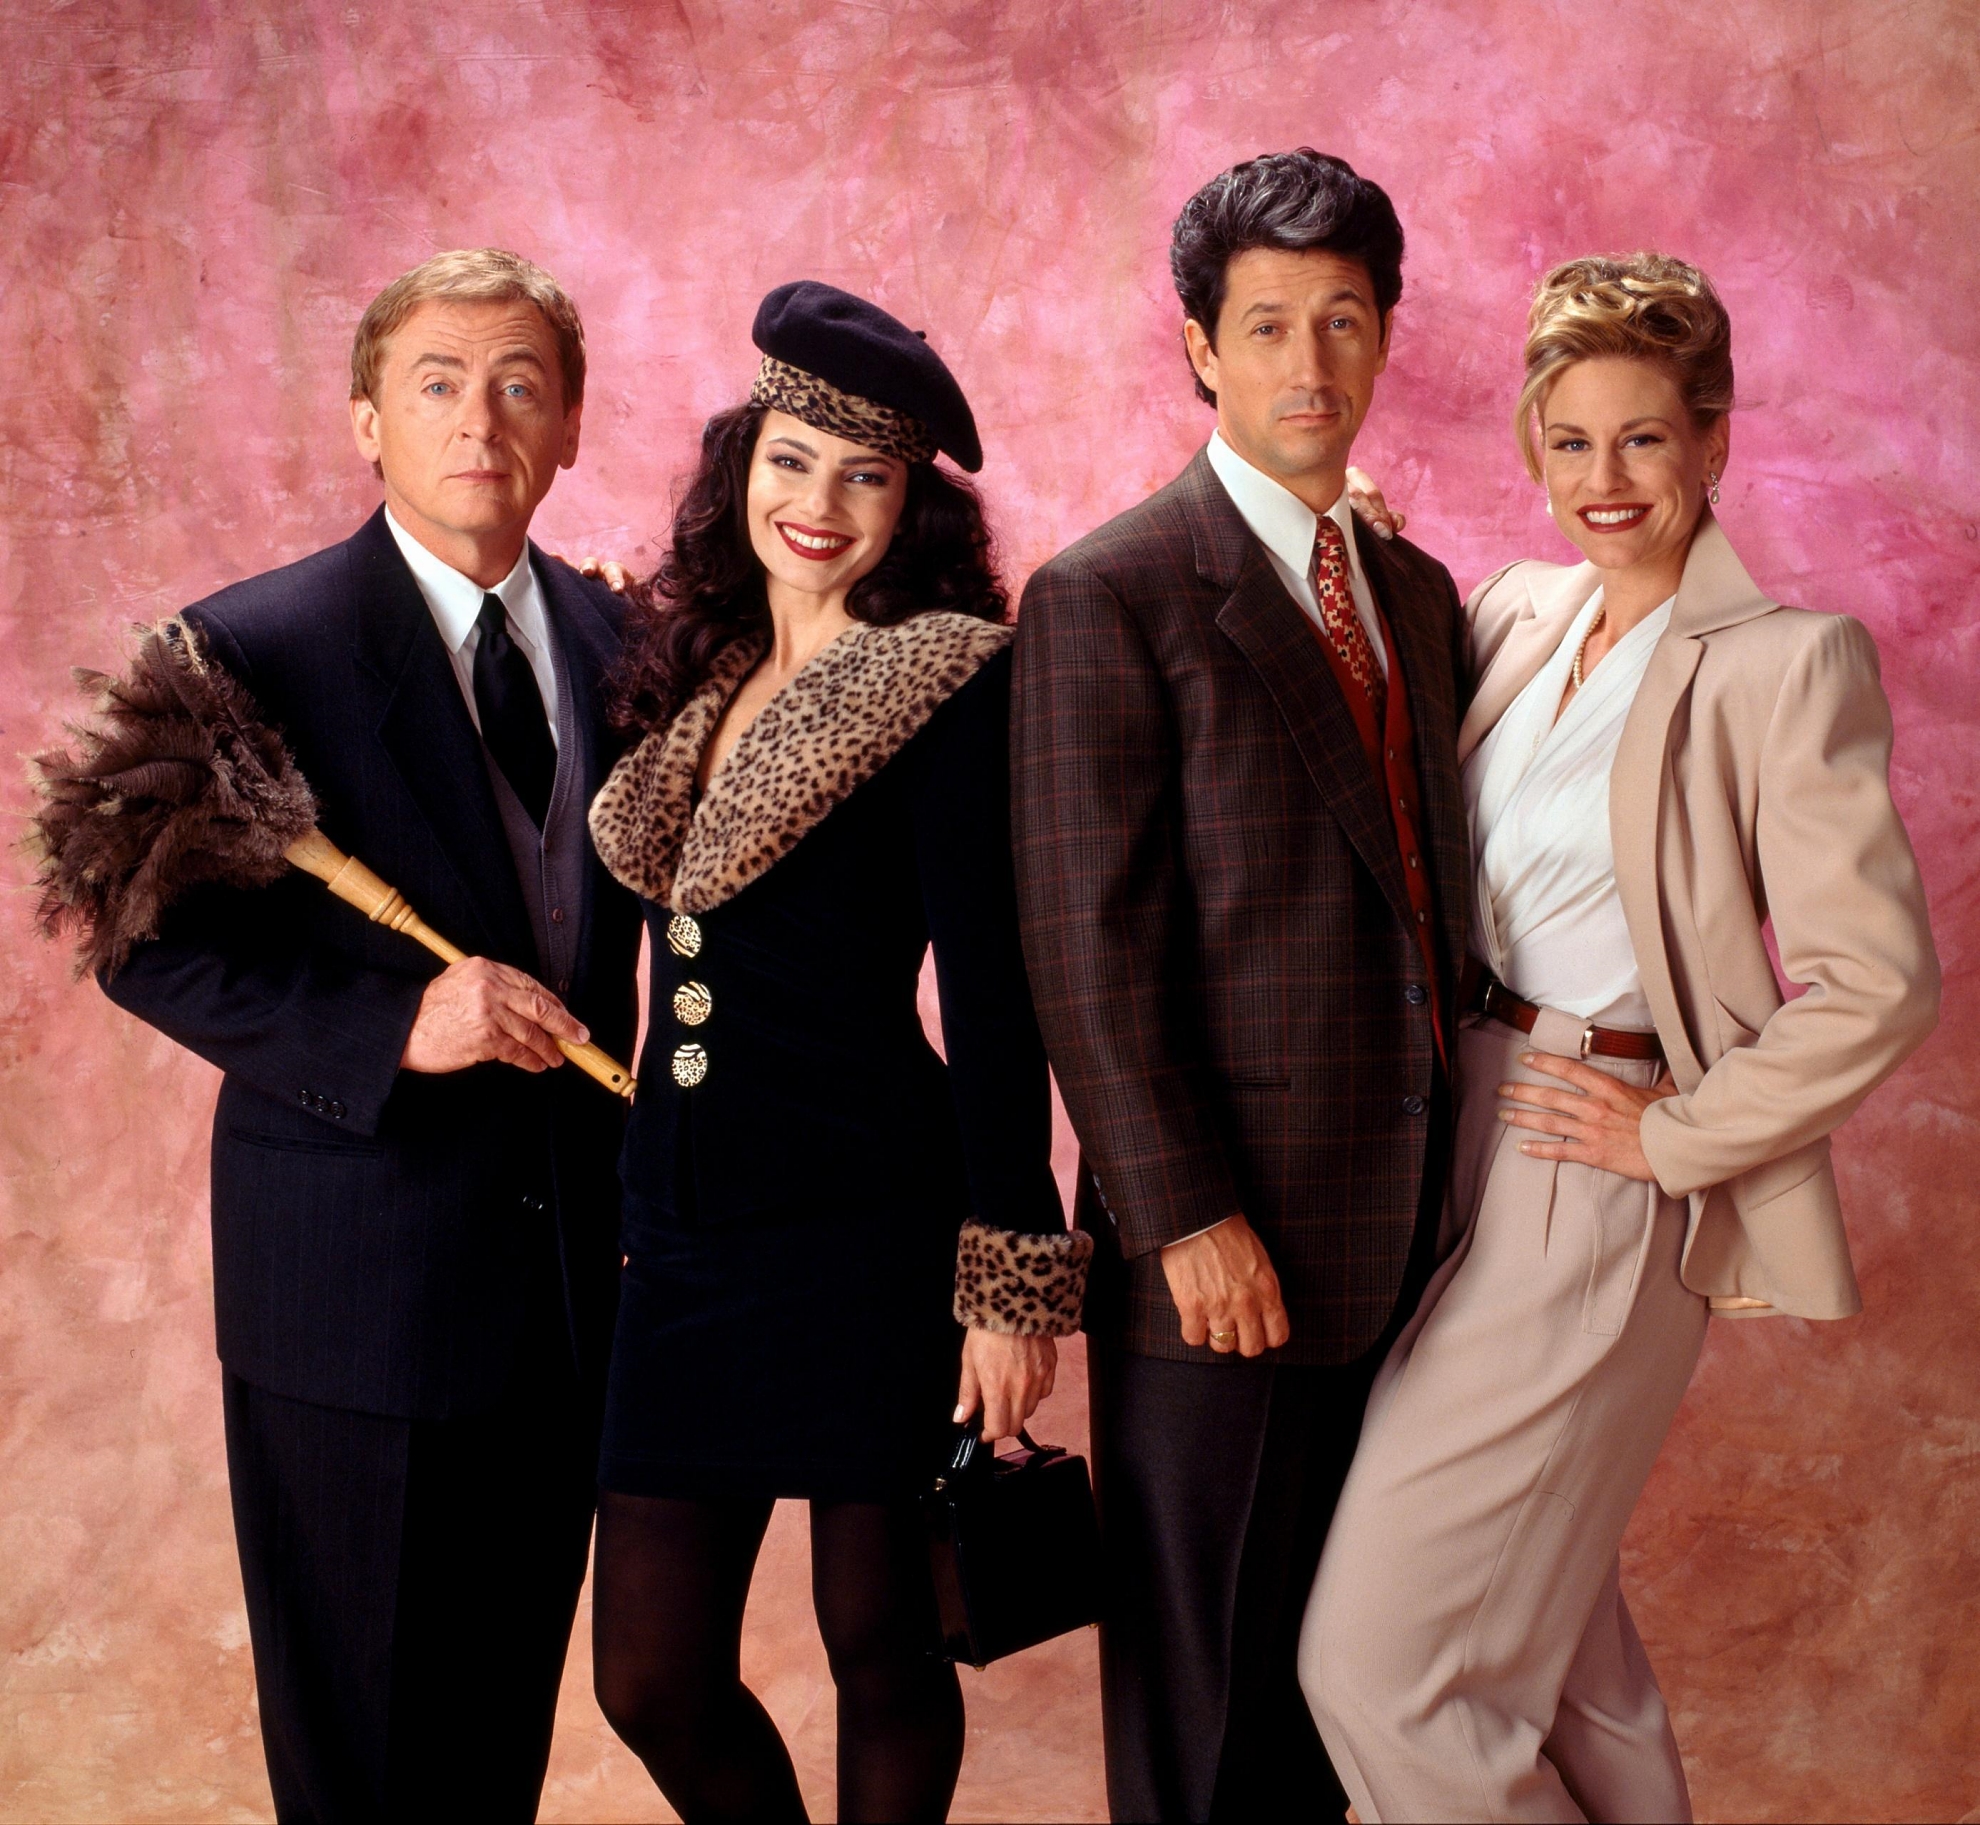 The Cast from 'The Nanny', Daniel Davis, Fran Drescher, Charles Shaughnessy and Lauren Lane, 1993.jpg